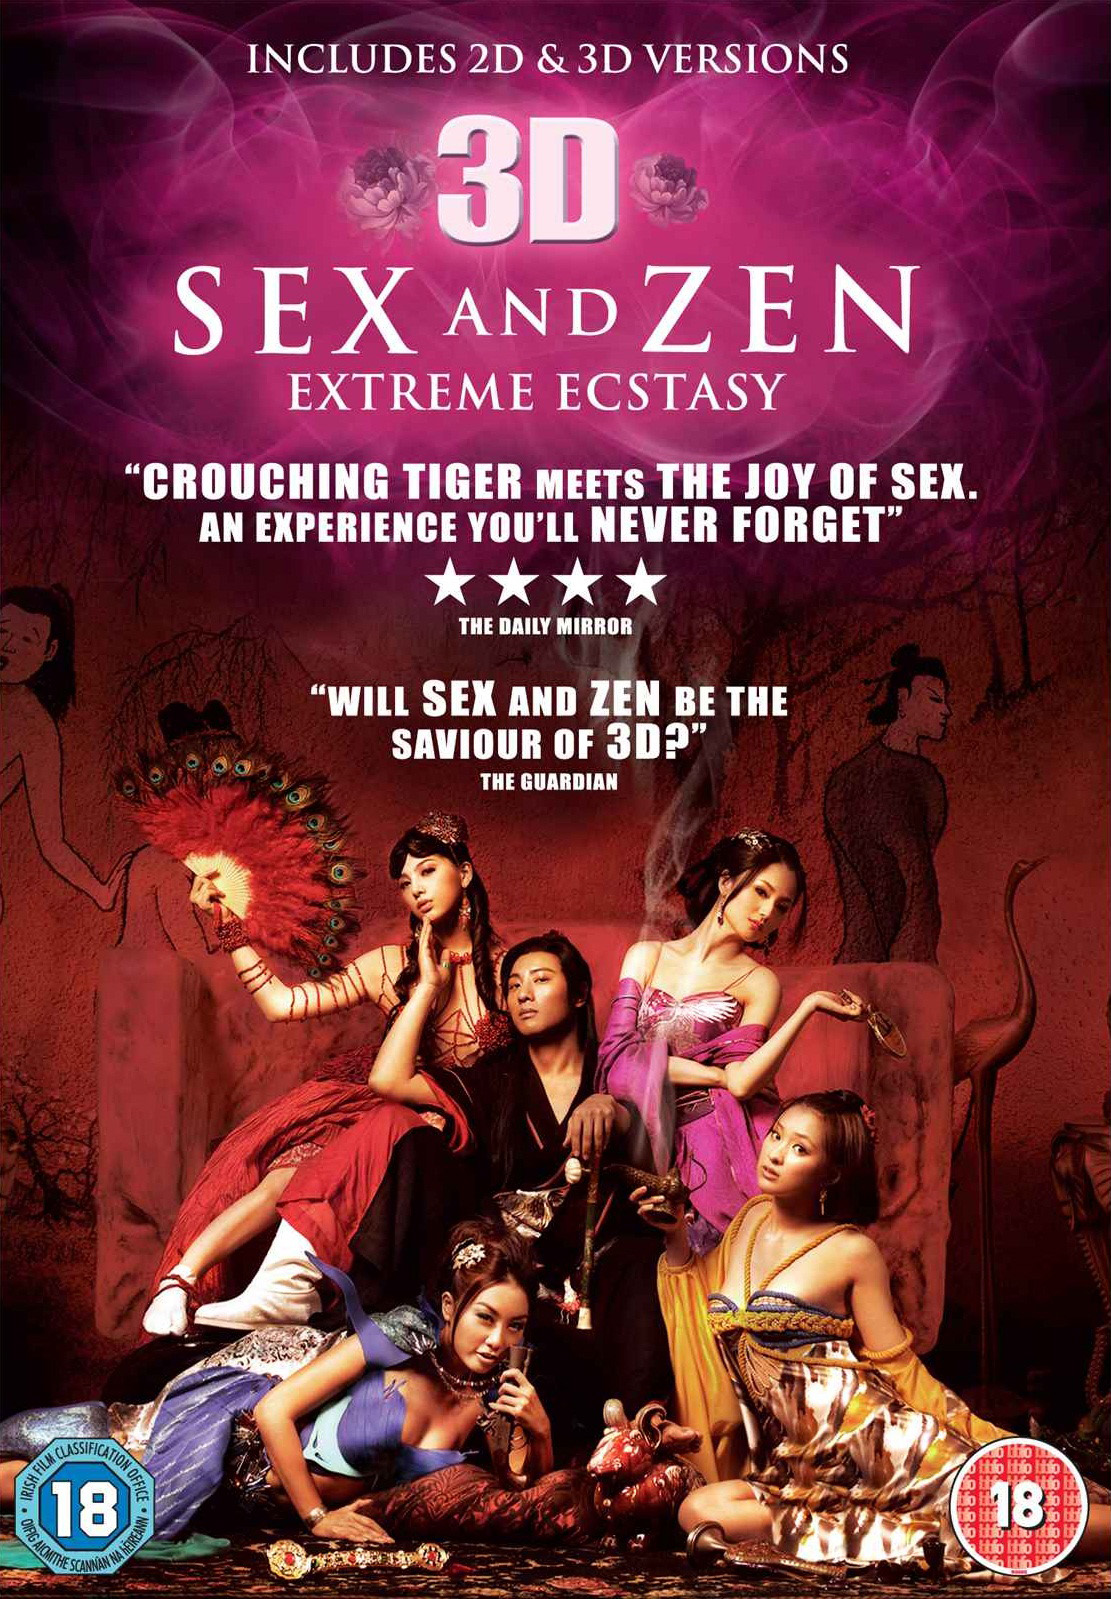 [3D肉蒲团之极乐宝鉴].Sex.and.Zen.Extreme.Ecstasy.2011.DC.3D&2D.BluRay.1080p.AVC.DTS-HD.MA.5.1-Ex-3DBlurayisoTeam    39.65G-7.jpg